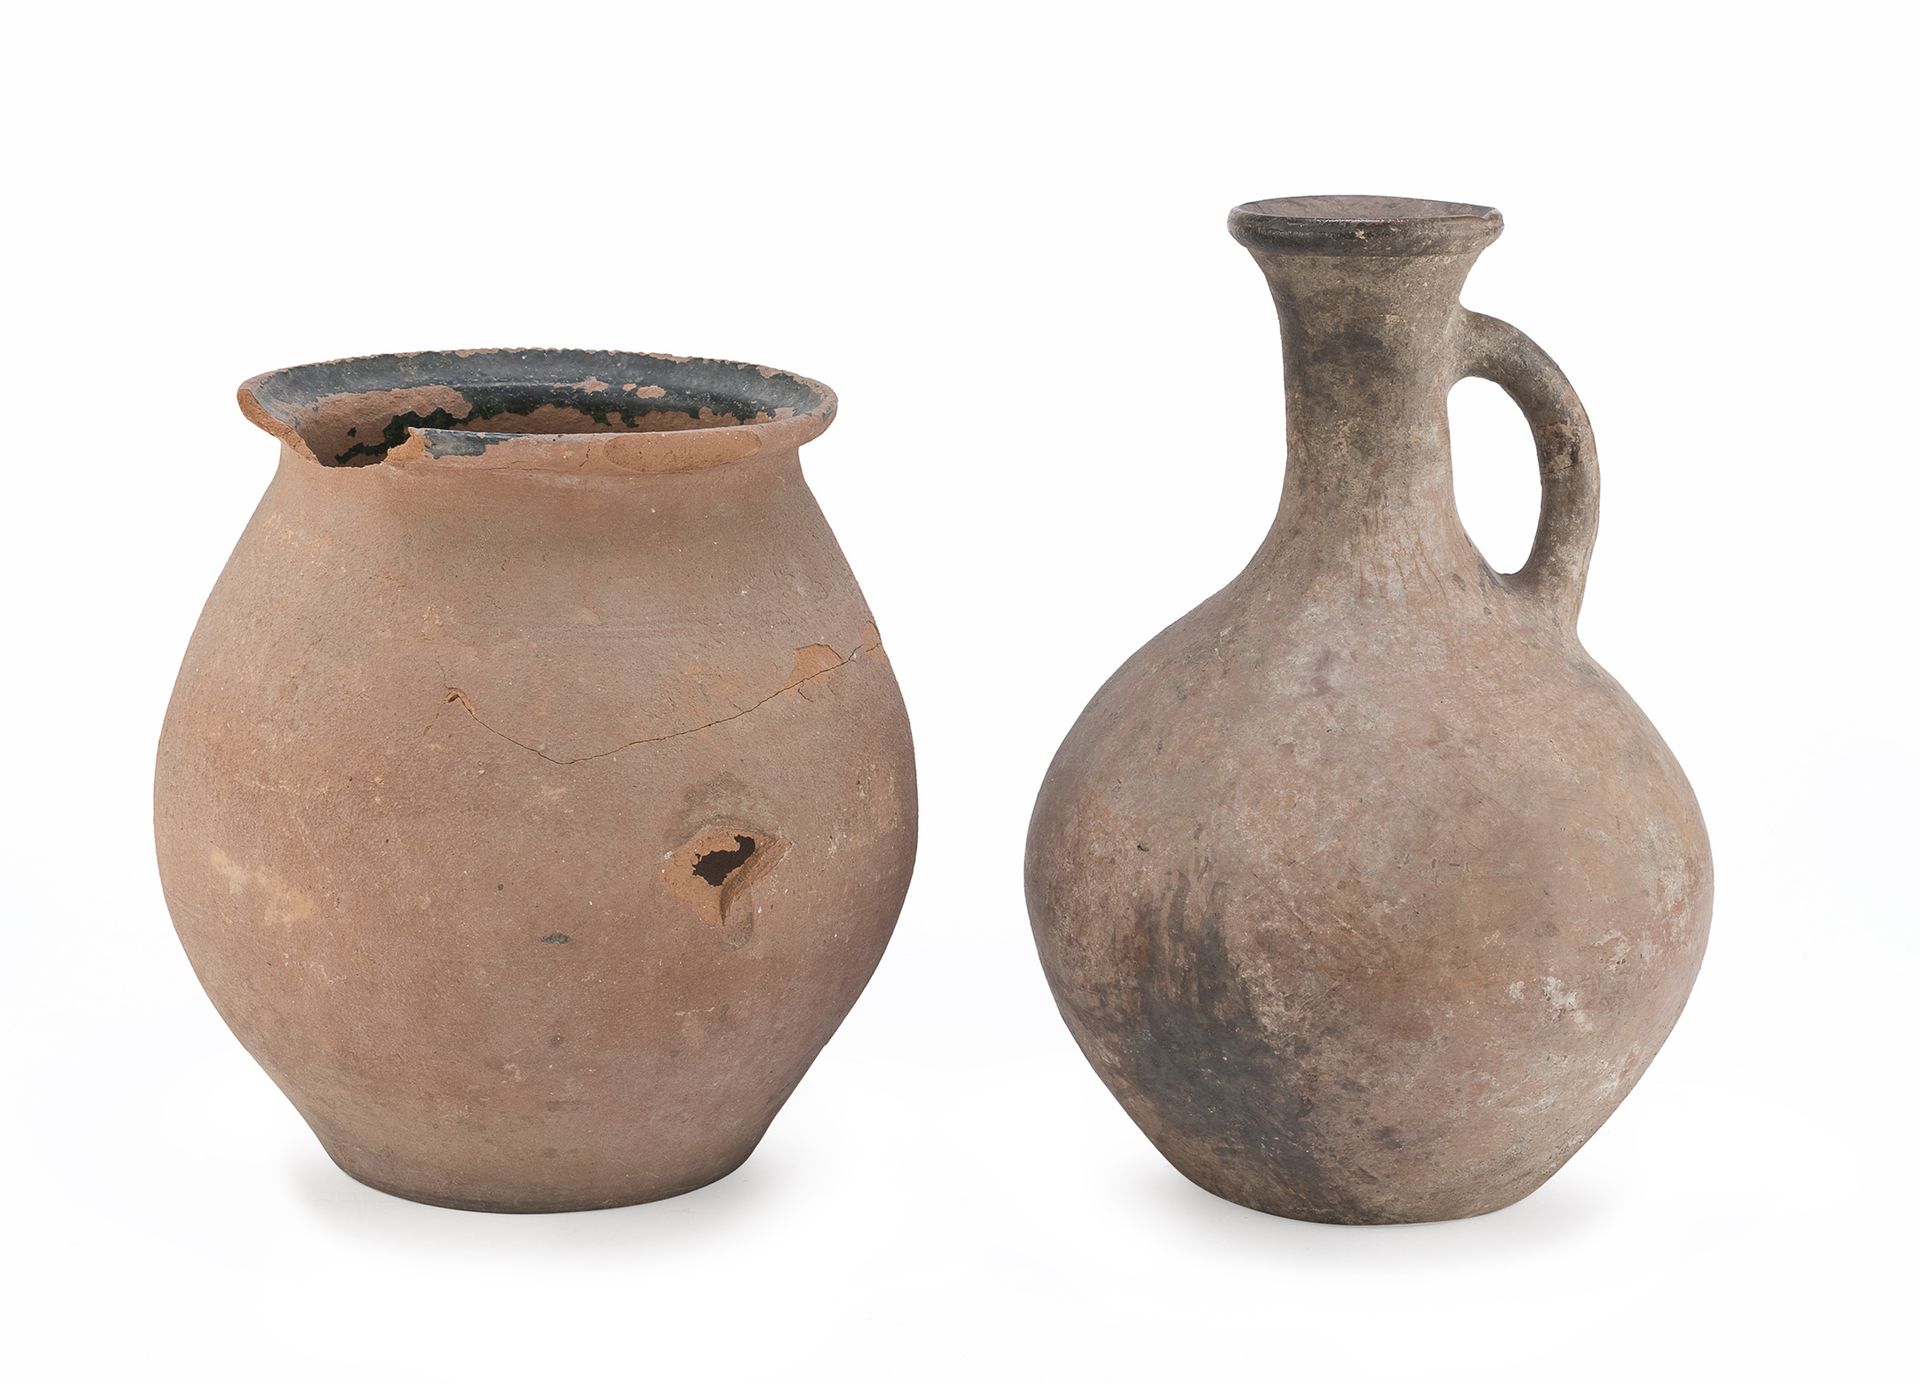 Null 陶器壶和陶器罐，20世纪初

形状为圆形。

尺寸为34 x 24厘米和26 x 27厘米。

罐子边缘破损，罐身有洞。